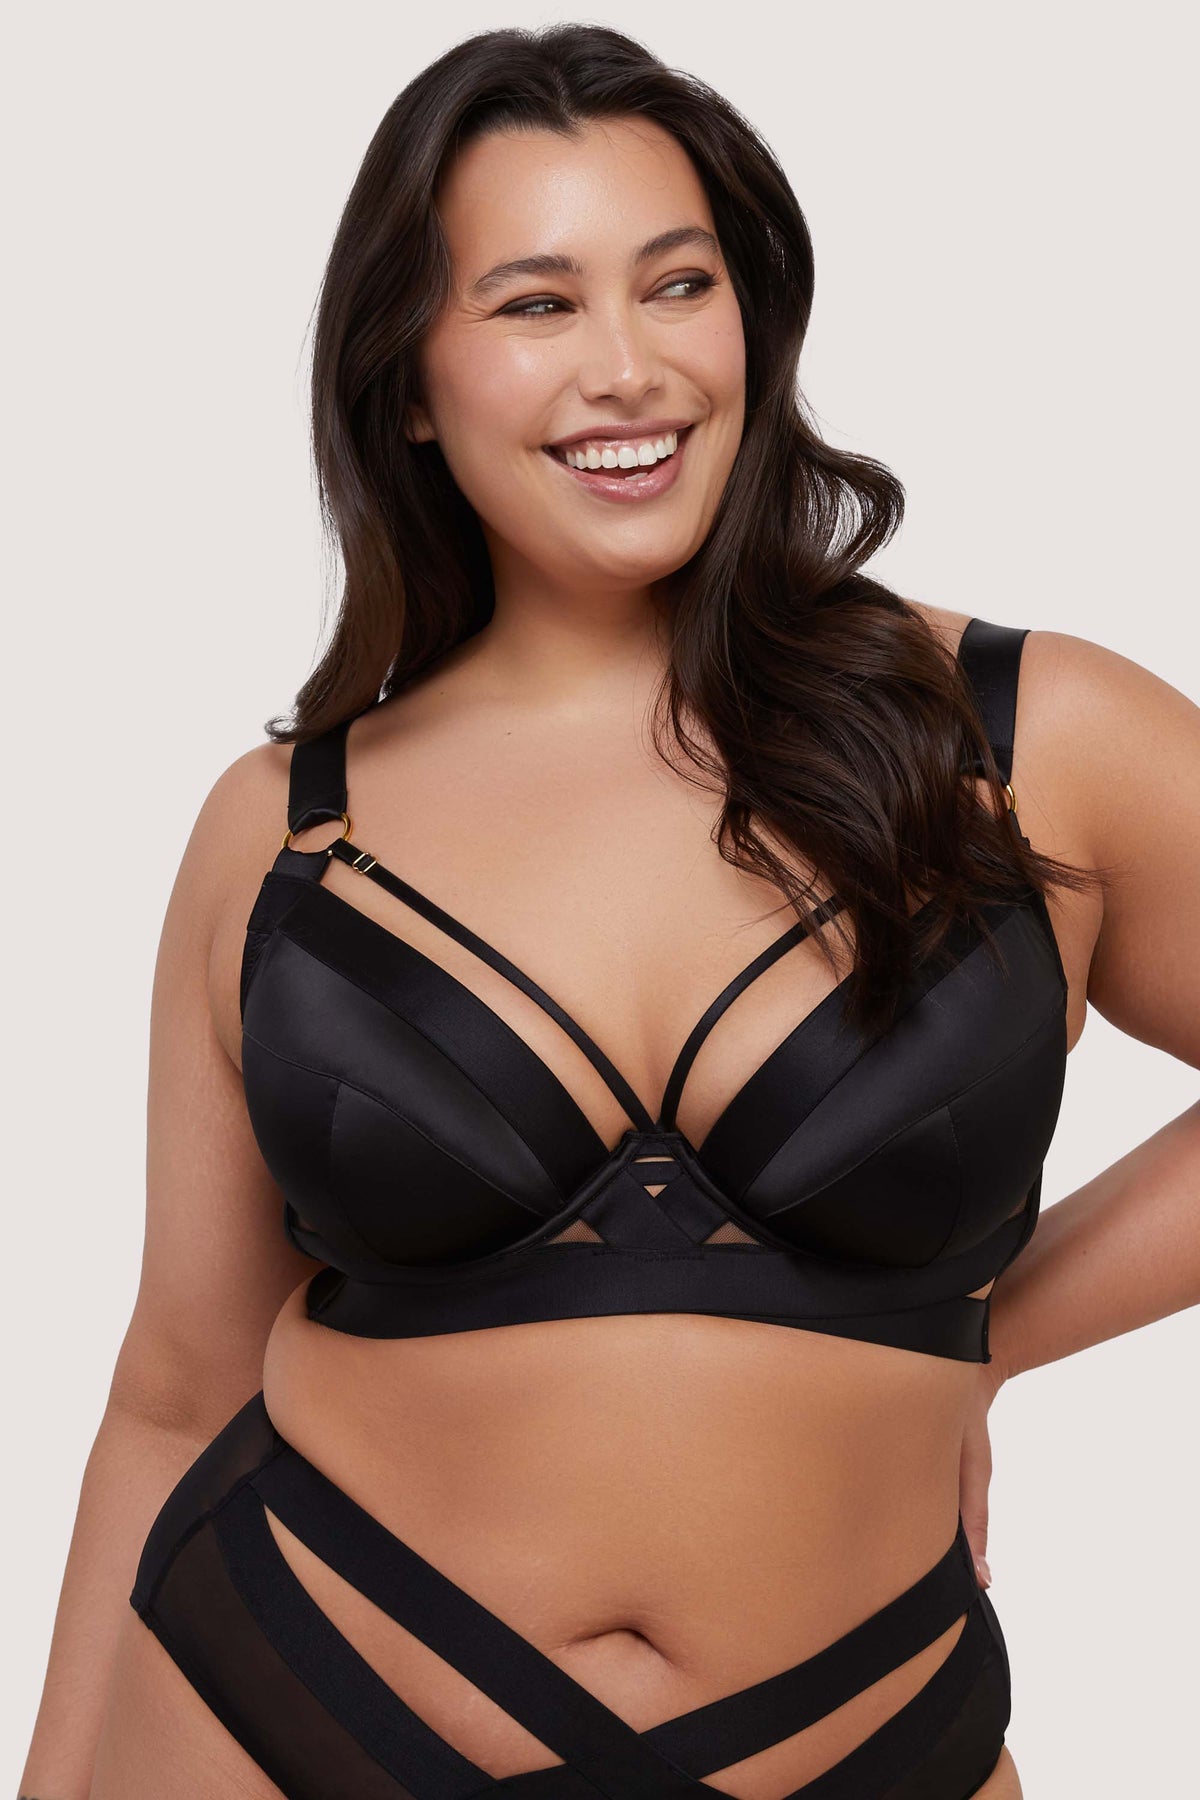 model wears black satin plunge bra with straps